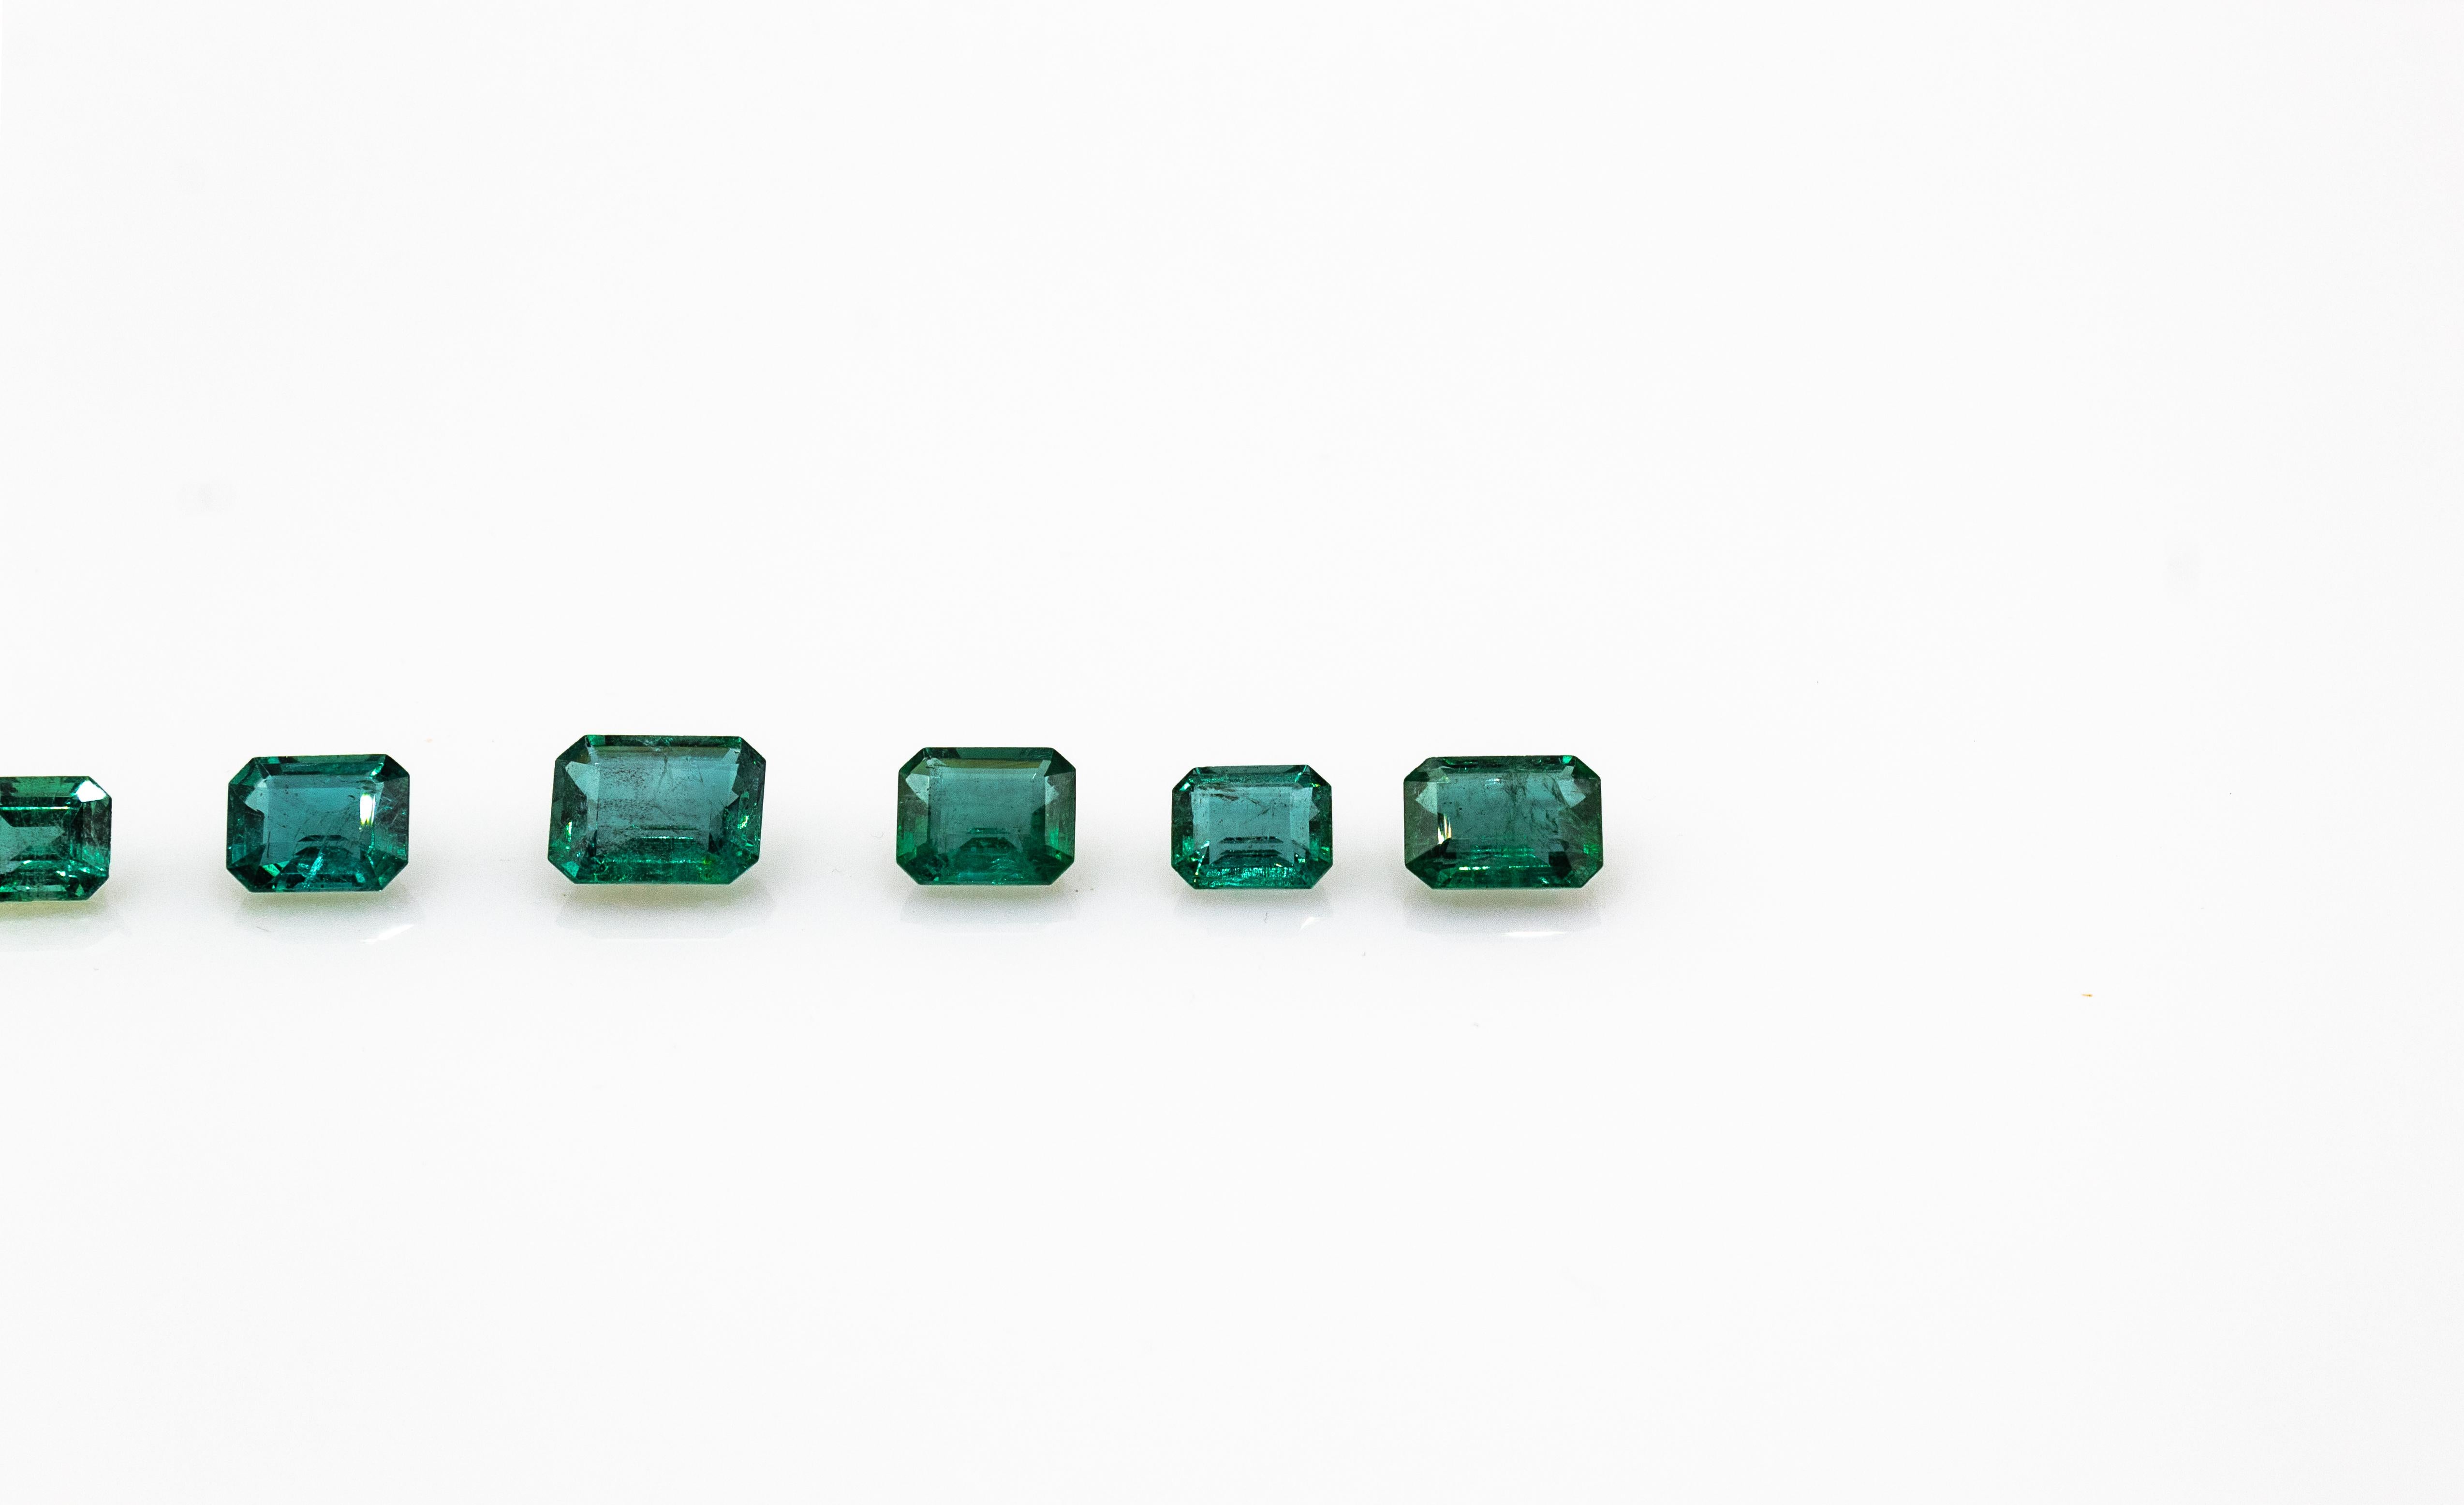 Certifiable Zambia Octagon Cut 4.18 Carat Emerald Loose Gemstone 3